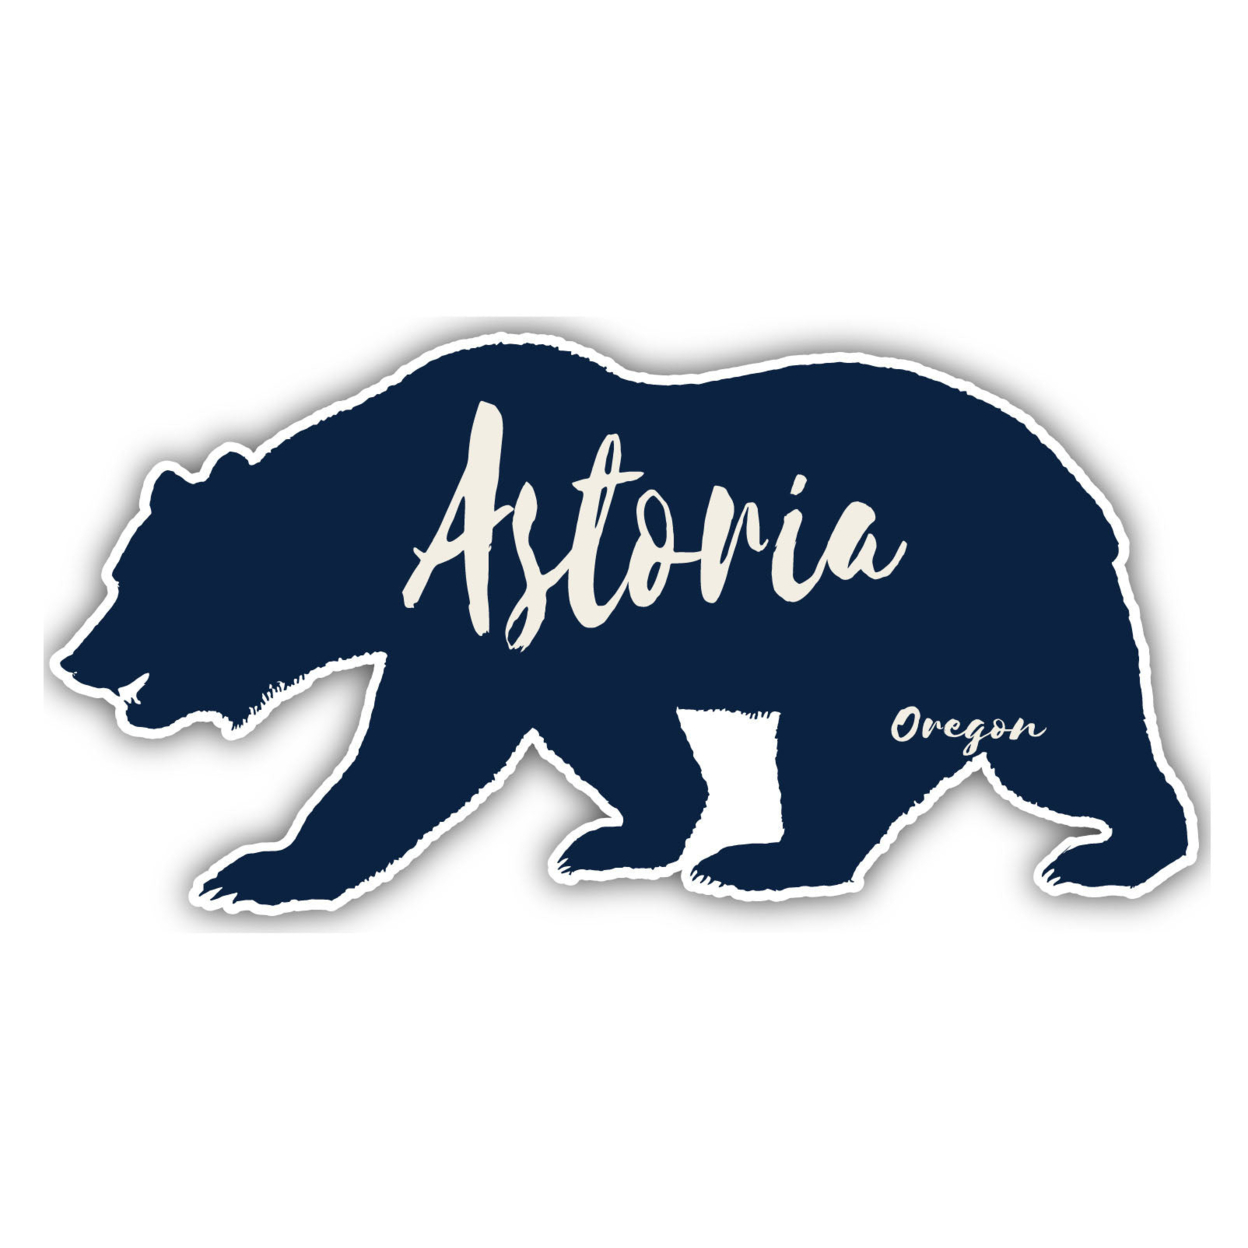 Astoria Oregon Souvenir Decorative Stickers (Choose Theme And Size) - Single Unit, 8-Inch, Camp Life